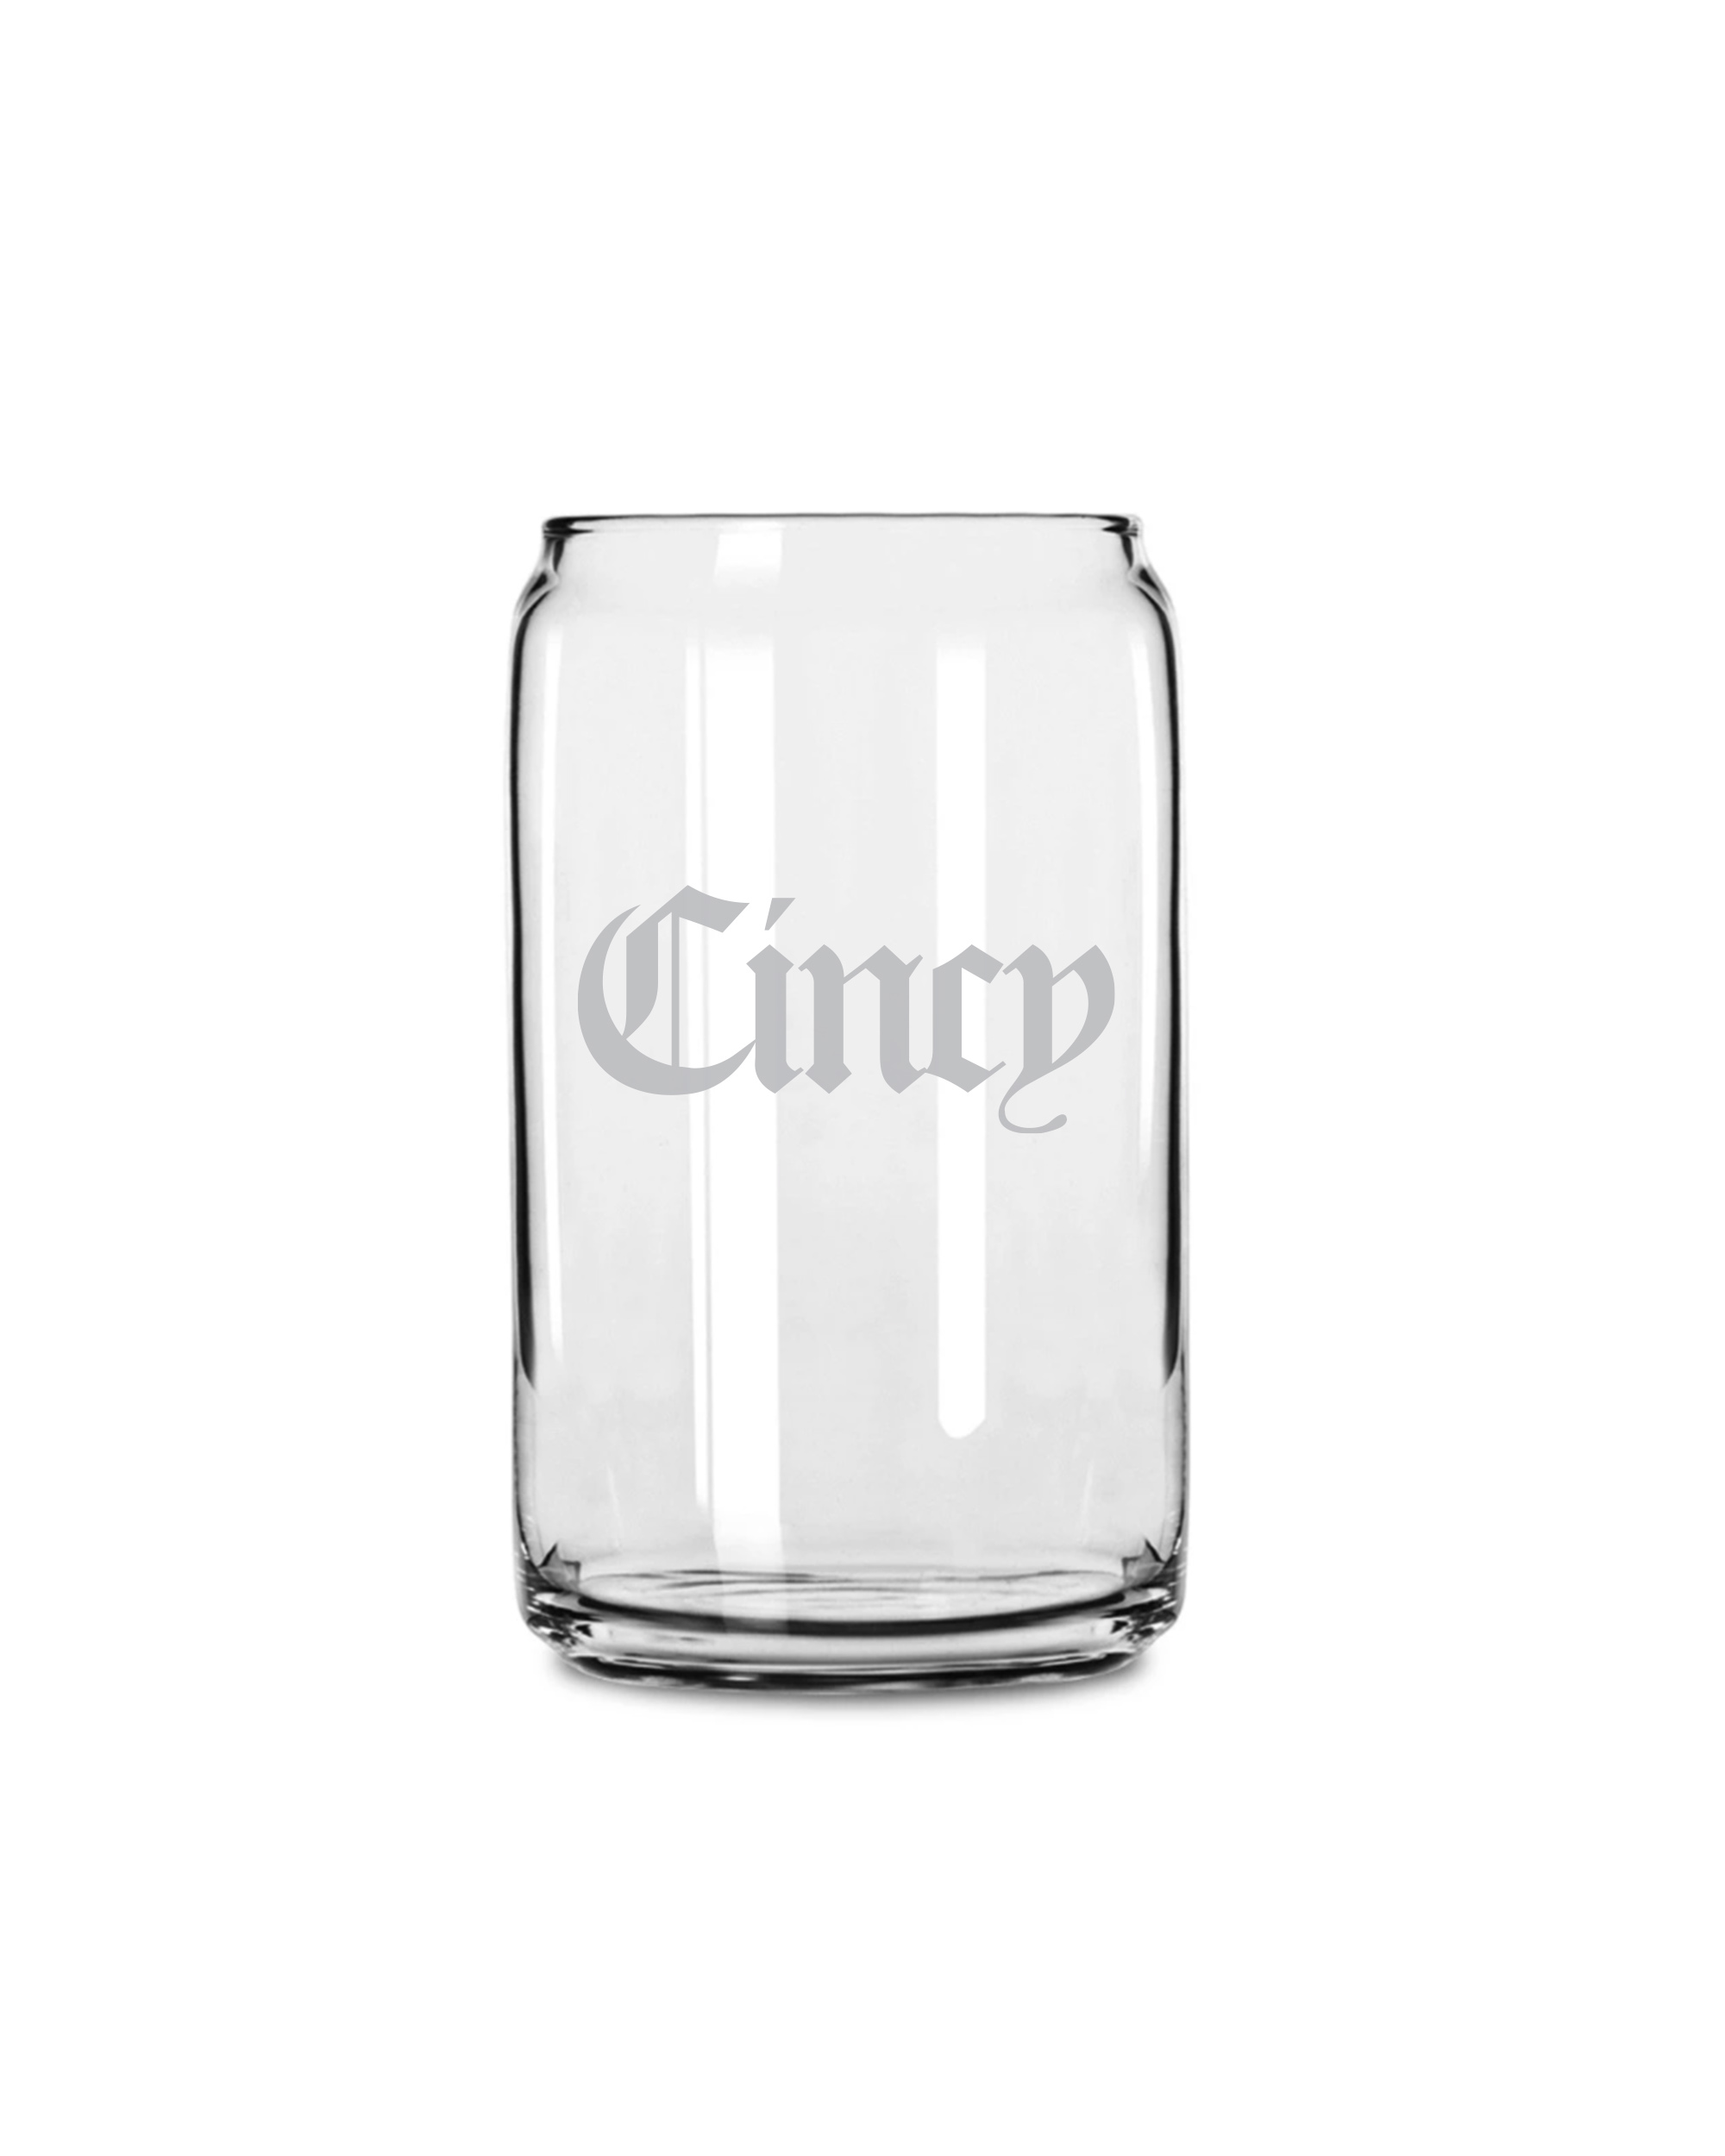 Cincy Can Glass - Where I'm Apparel